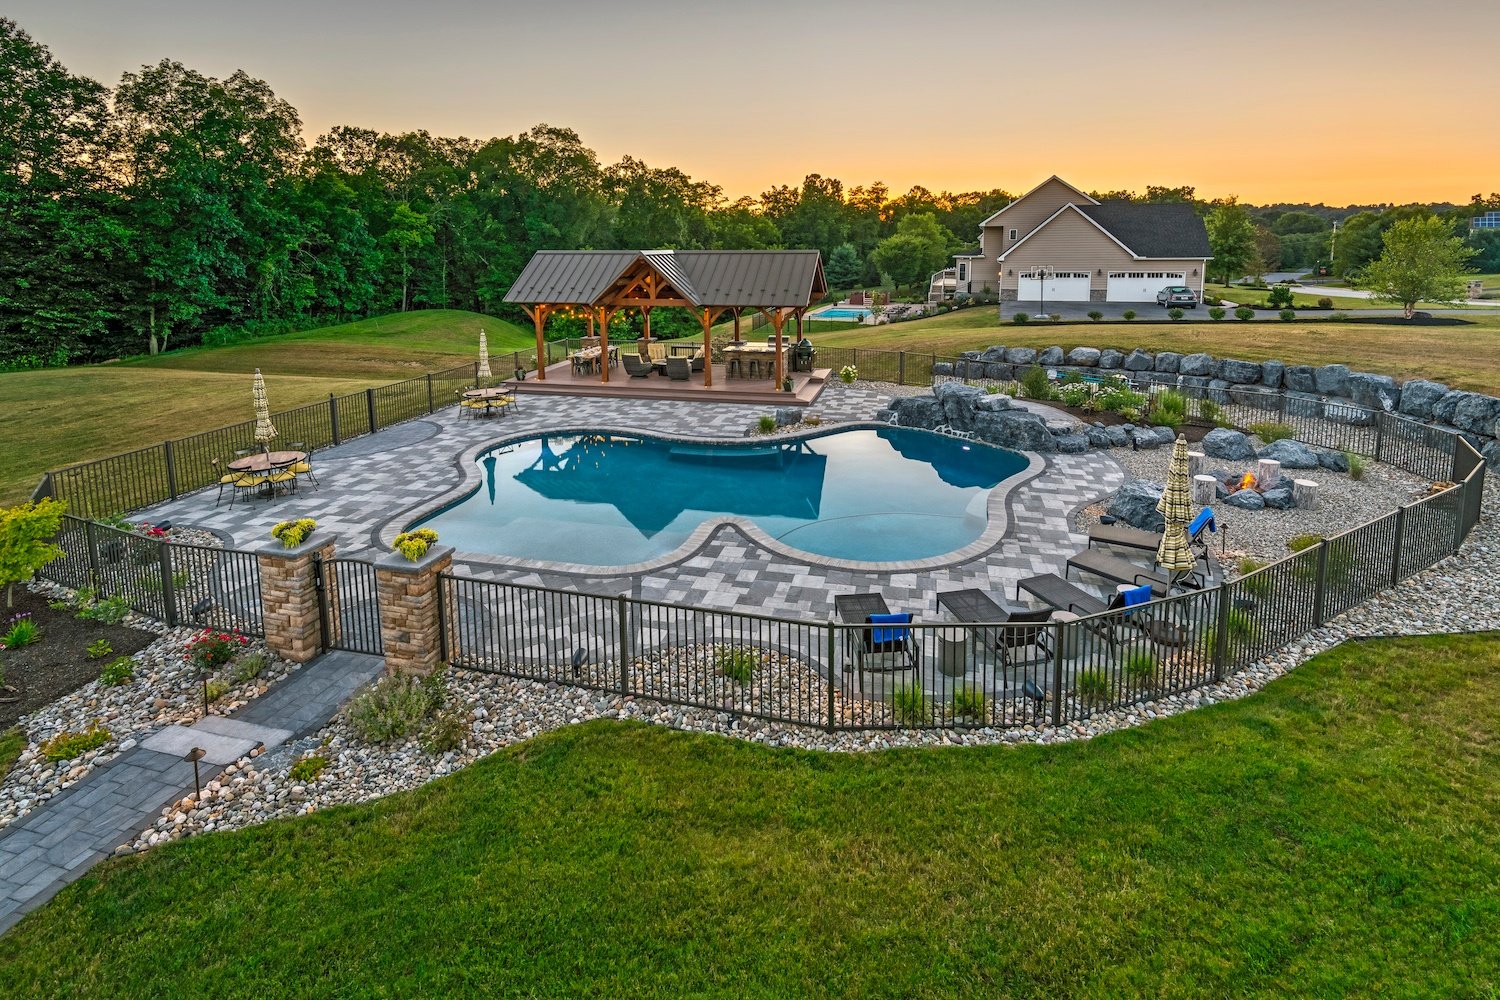 Harrisburg, PA Pool & Landscape Design Case Study: Creating a Family-Friendly Backyard